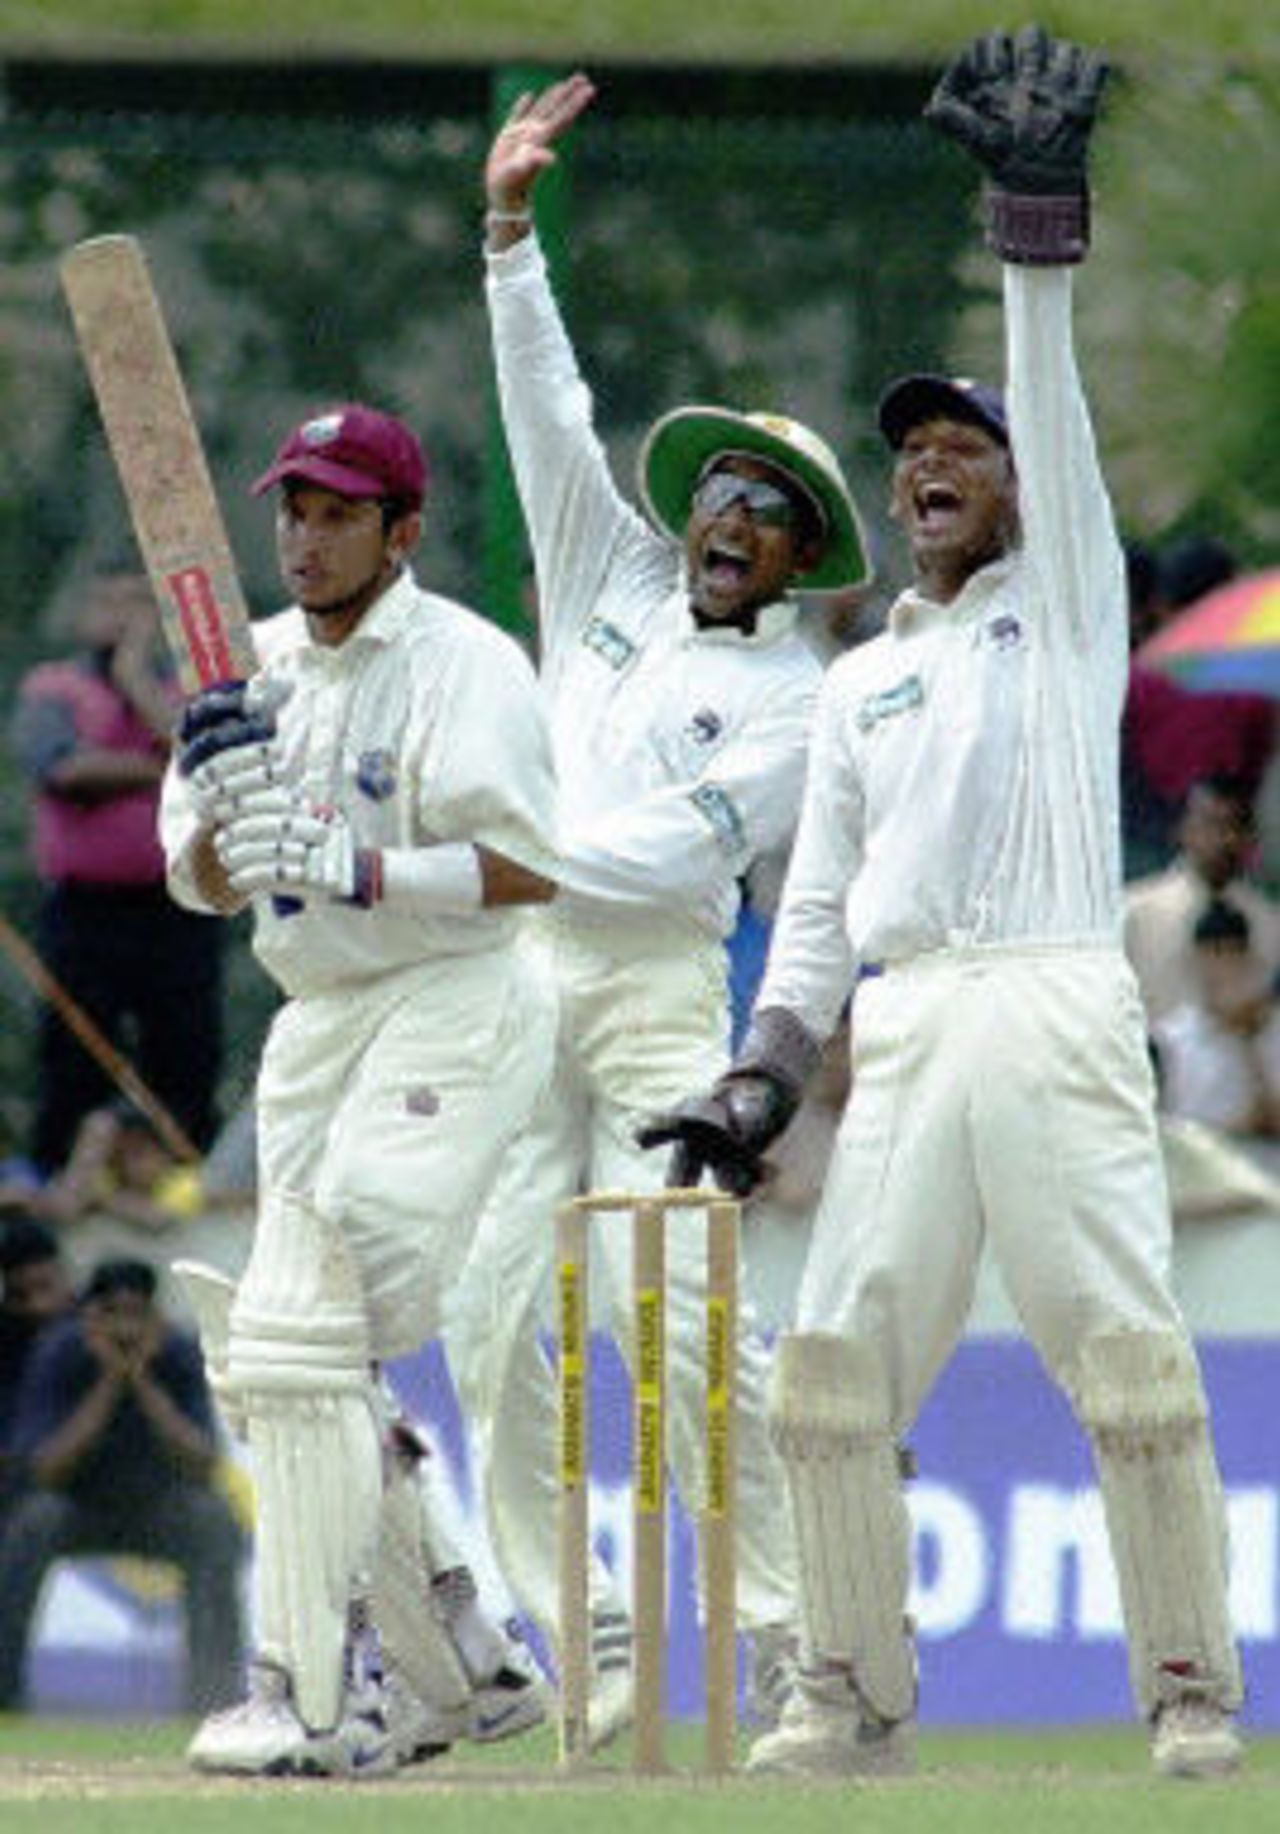 Kumar Sangakkara and Mahela Jayawardane appealing for an LBW for West Indies batsman Ramnaresh Sarwan